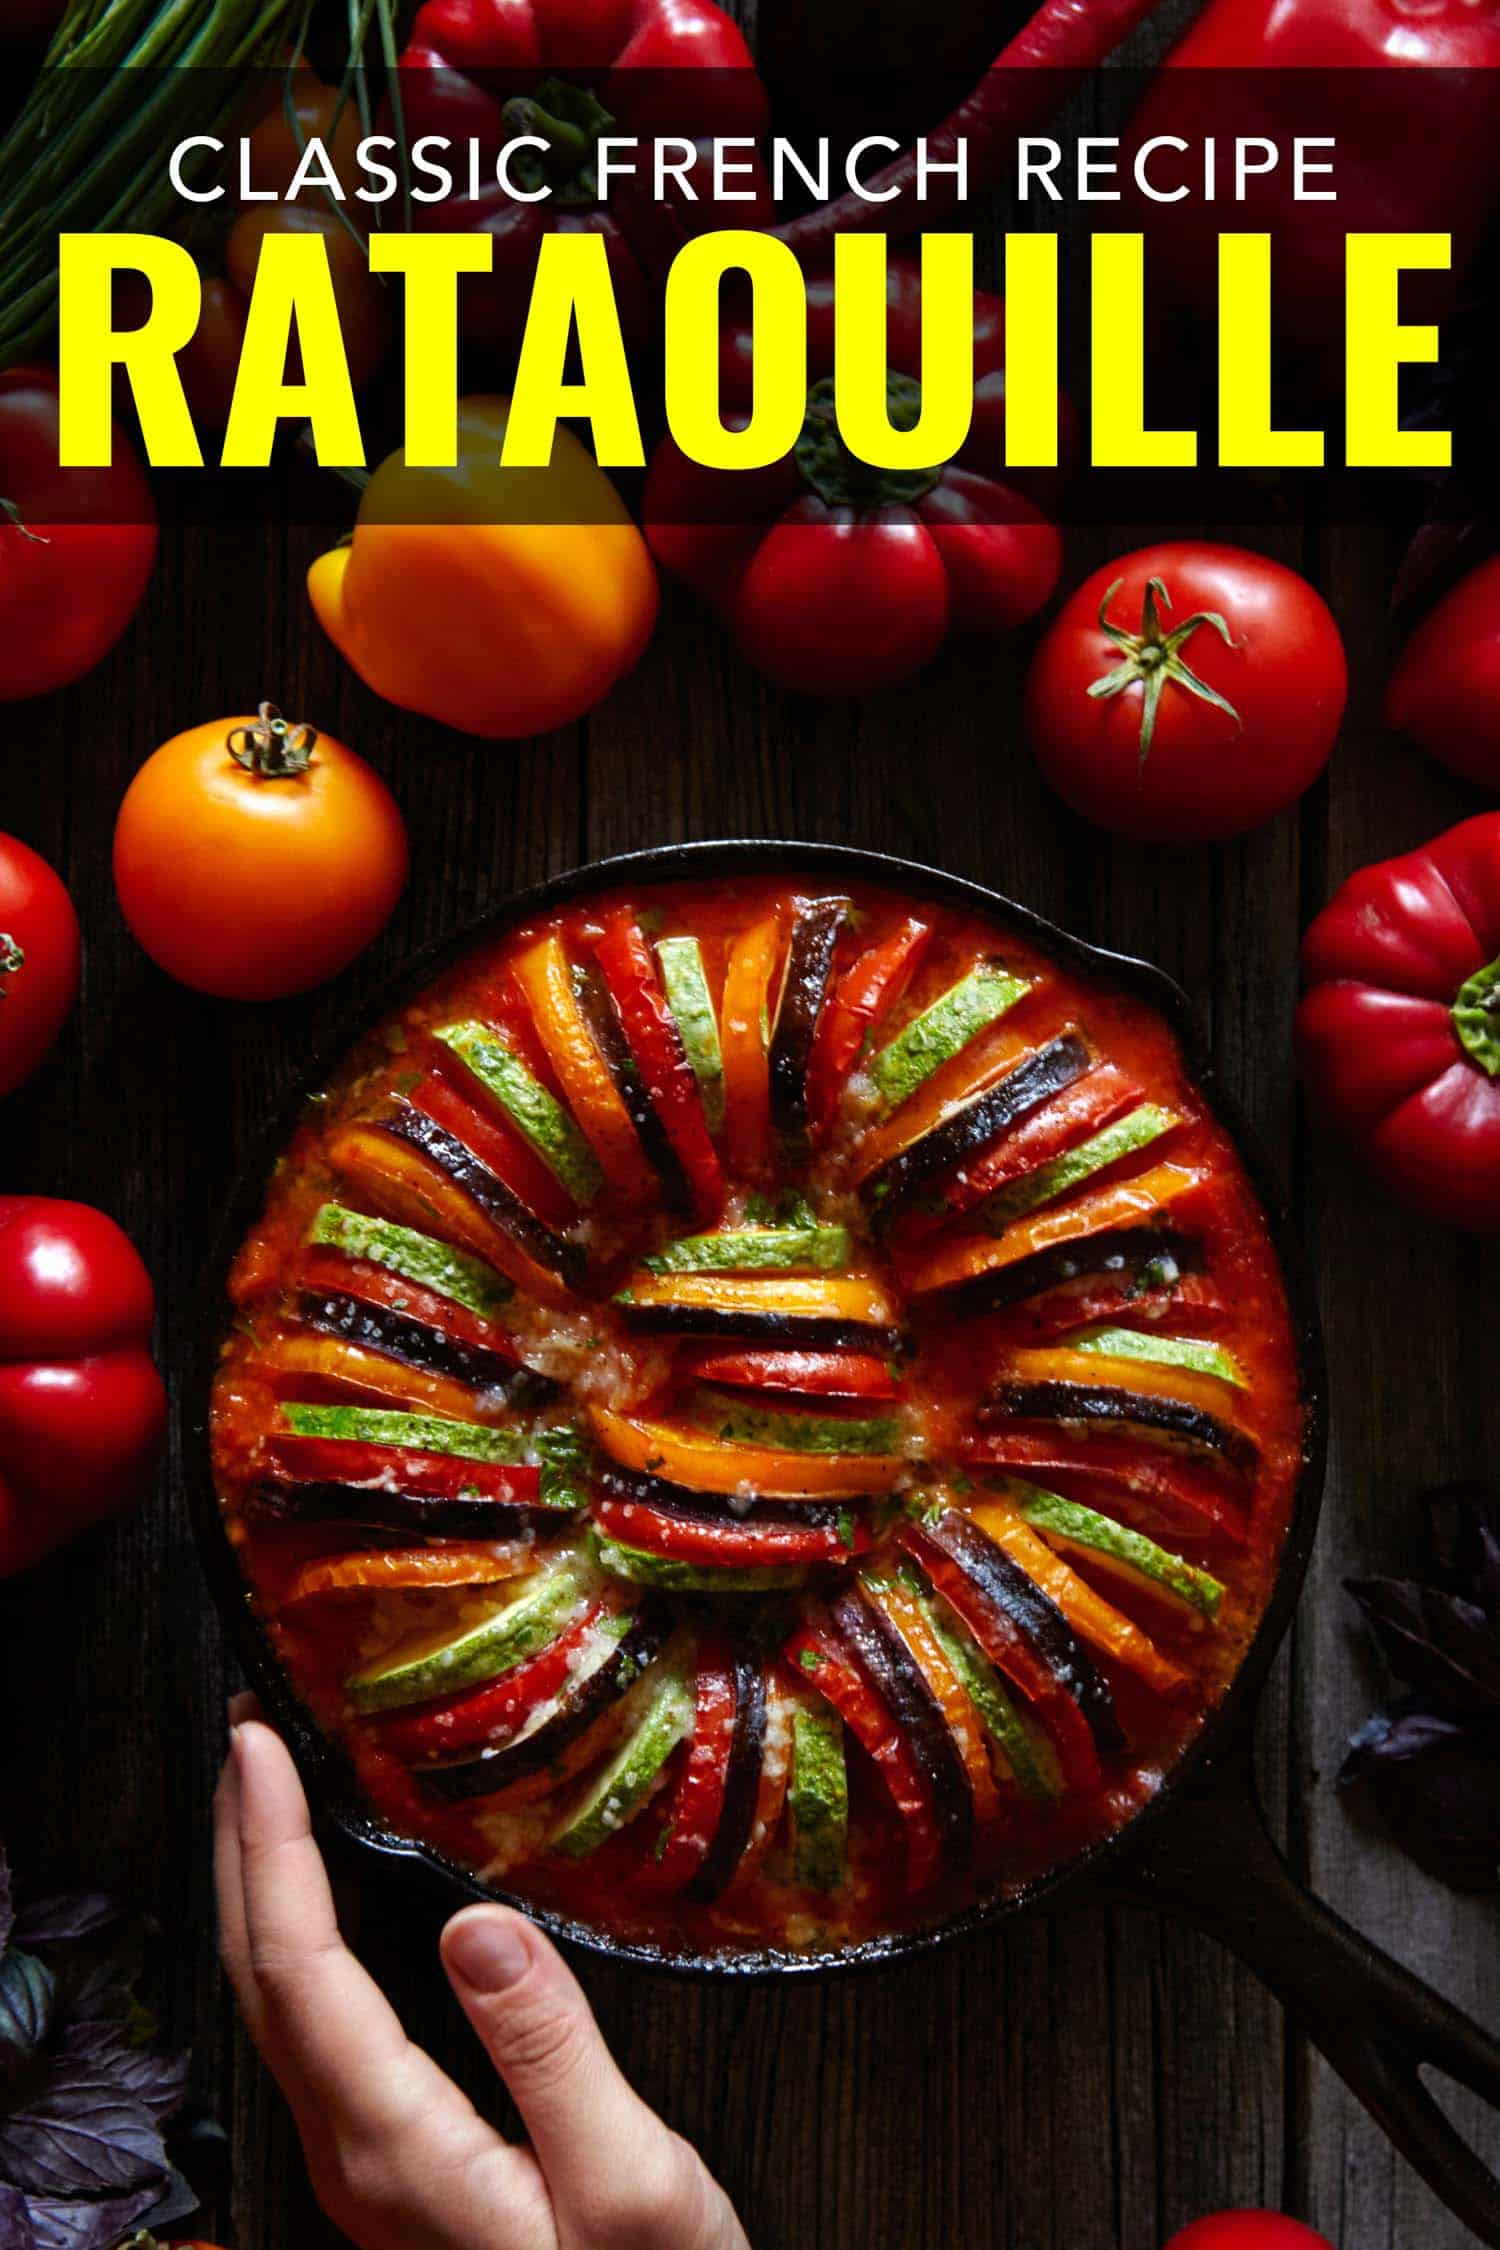 French ratatouille dish